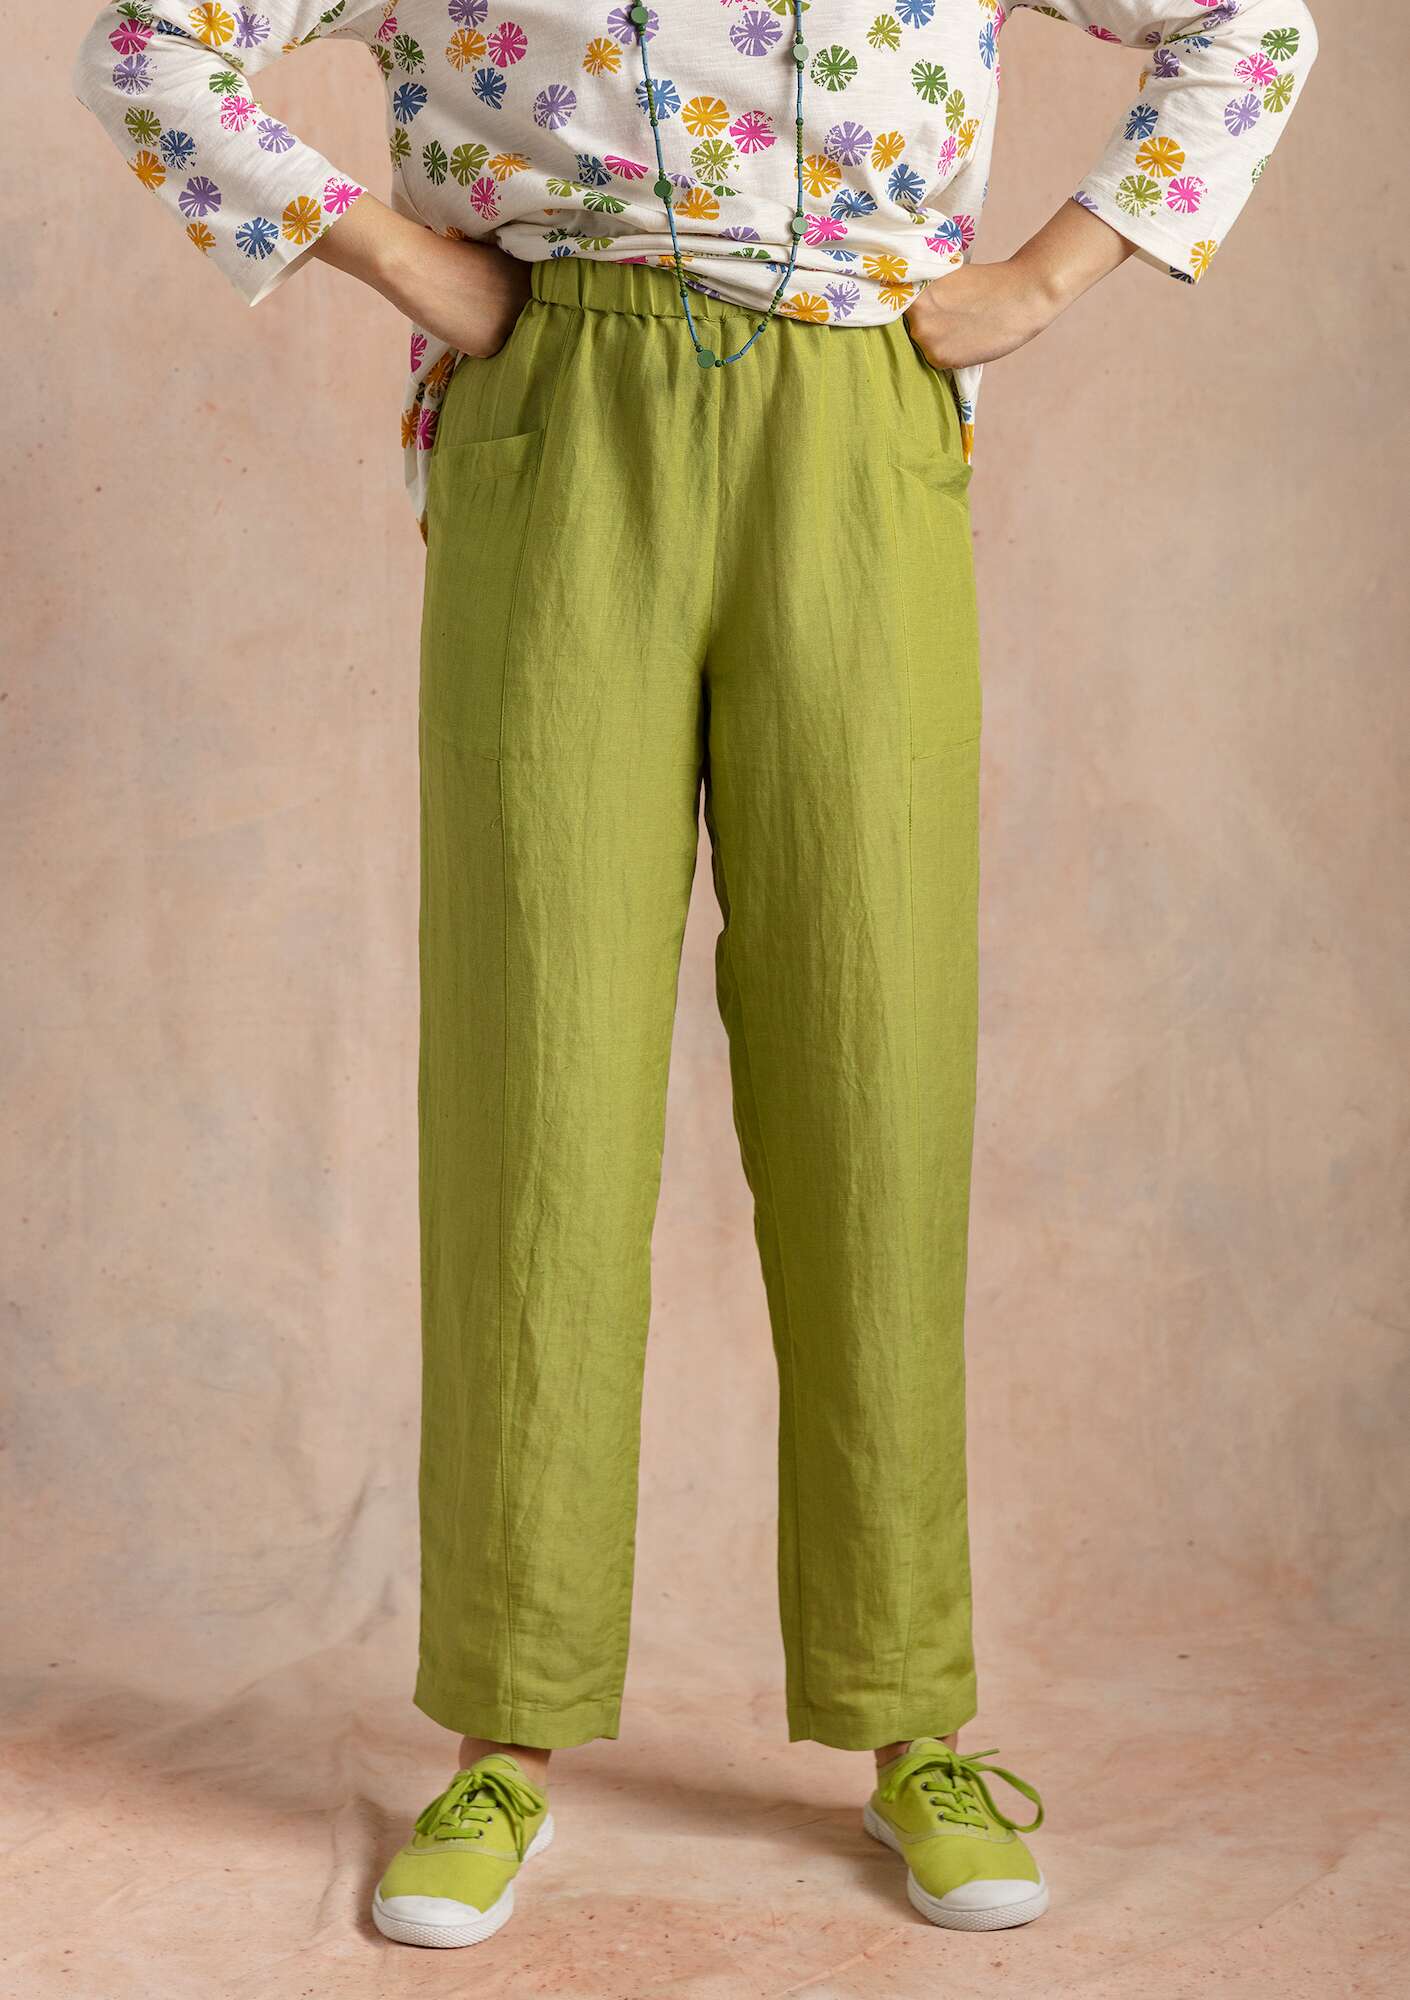 Solid-colored pants kiwi